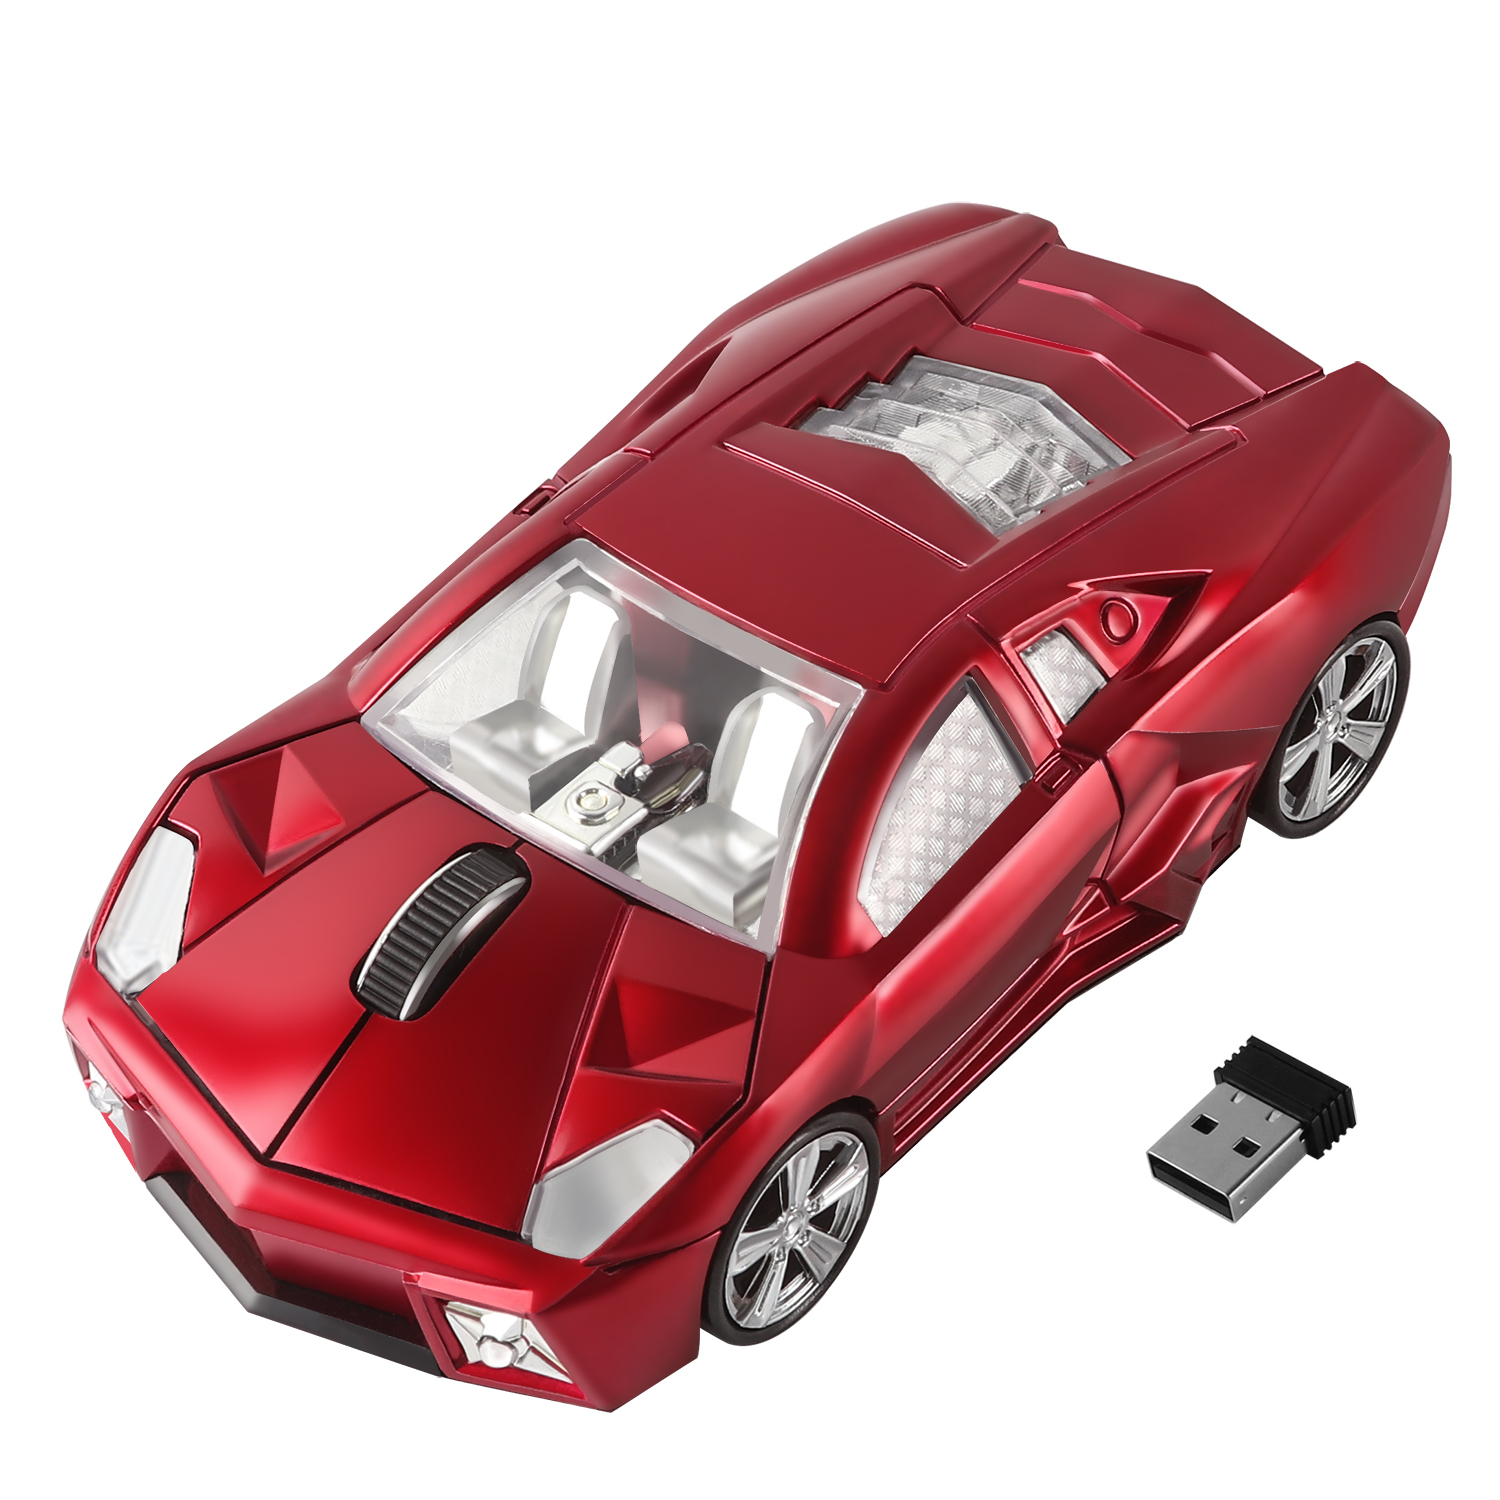 2-4G-ماوس لاسلكي-مريح-رياضي-تصميم سيارة-ماوس ألعاب-1600-DPI-USB-بصري-للأطفال-هدية (11)